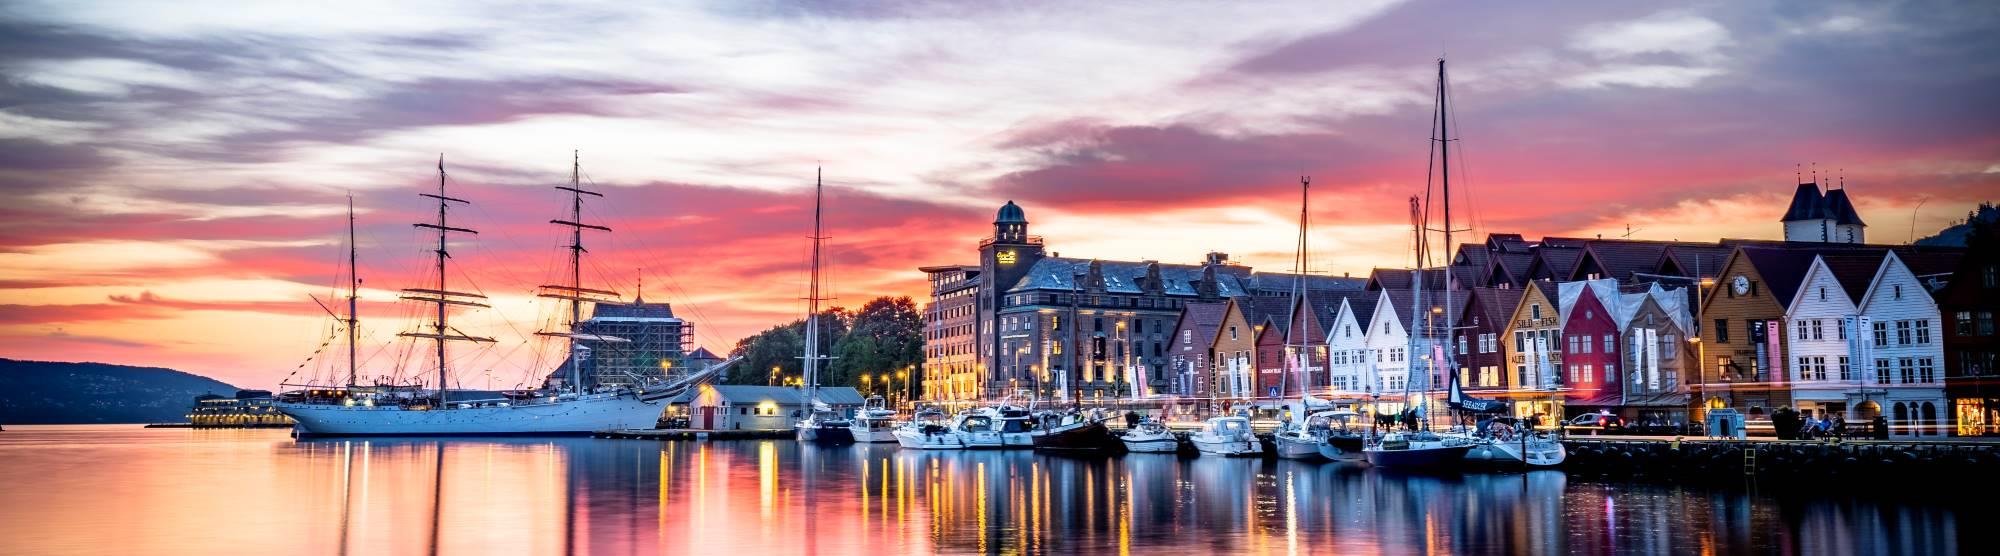 Luxury stay in Bergen - sunset at Bryggen